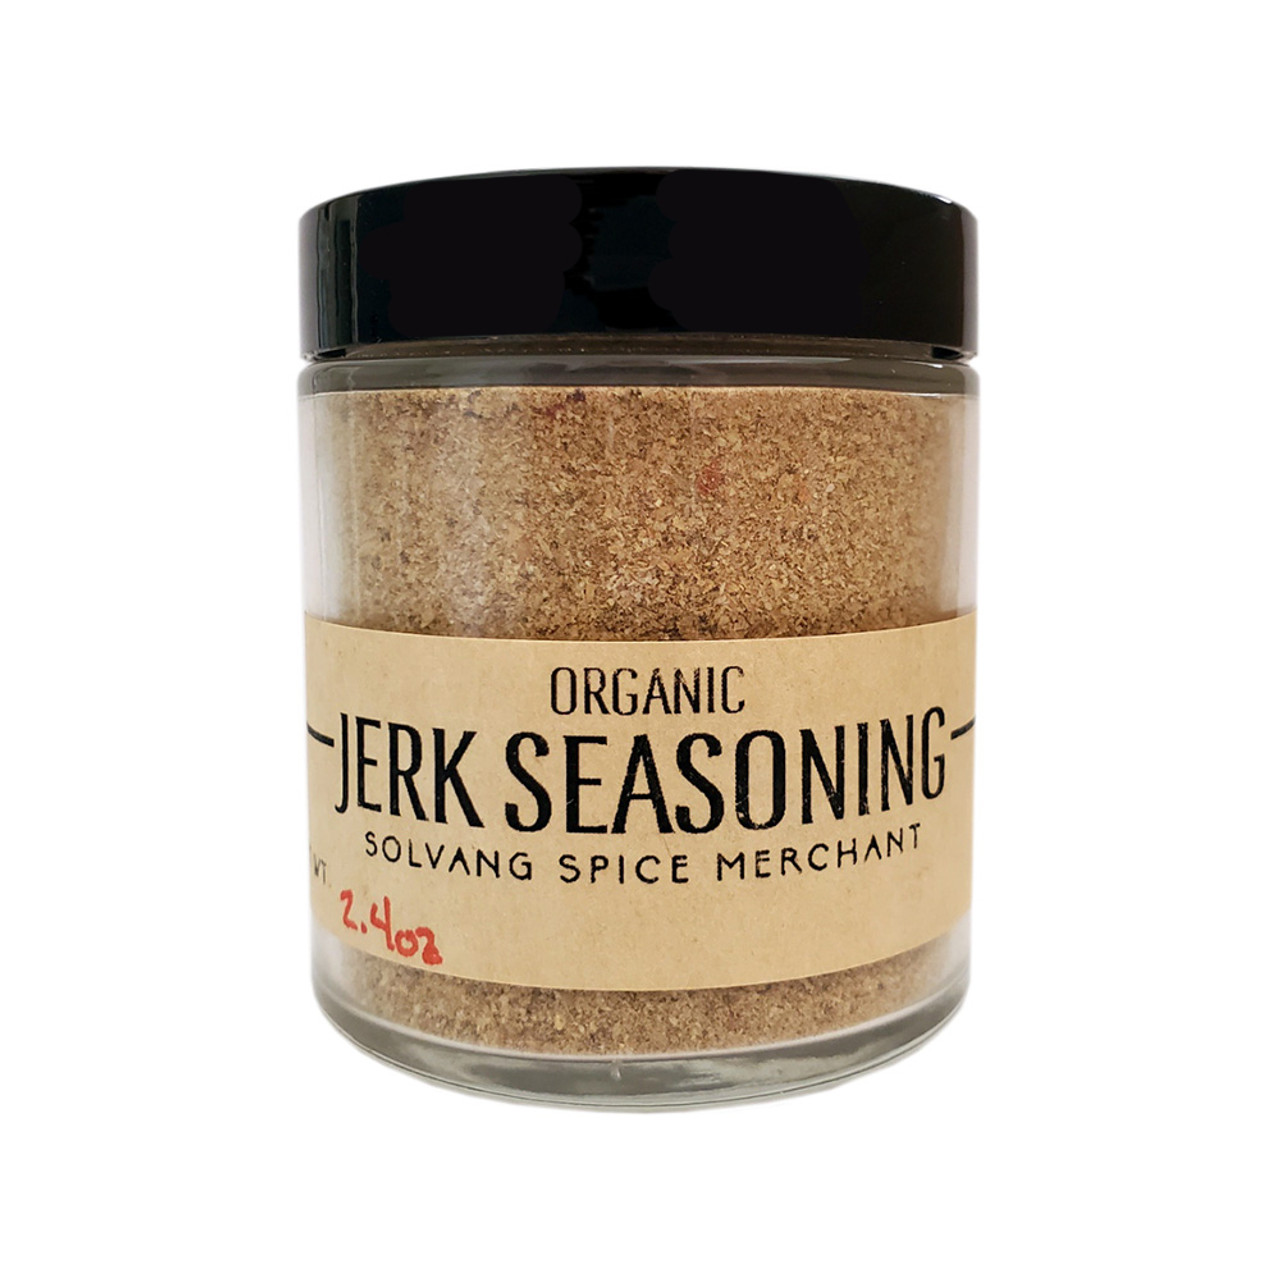 Jerk Seasoning, Organic - Solvang Spice Merchant